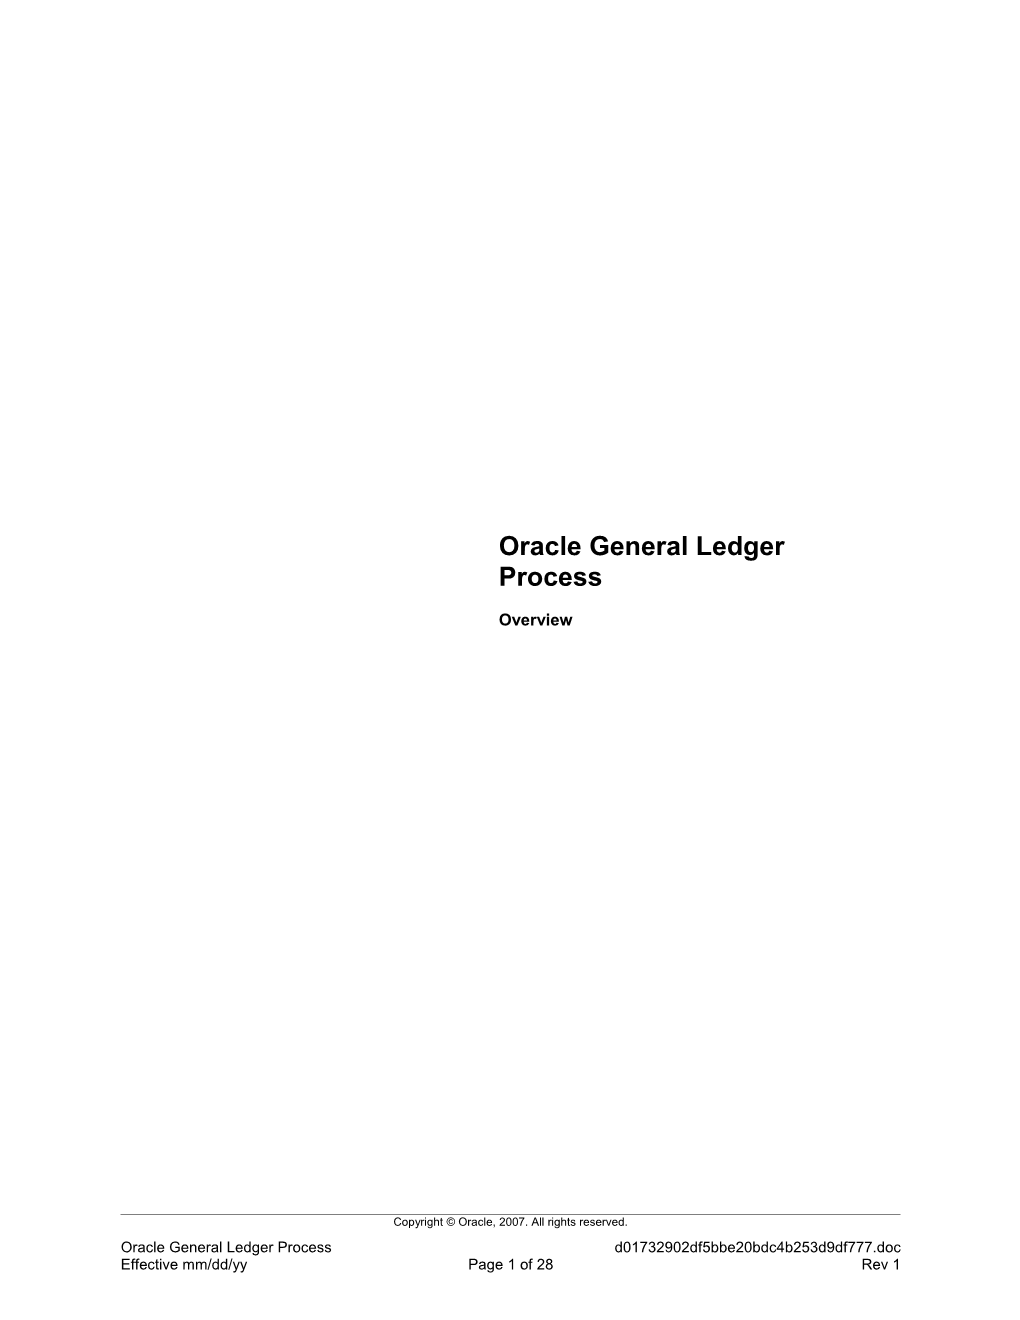 Oracle General Ledger Process